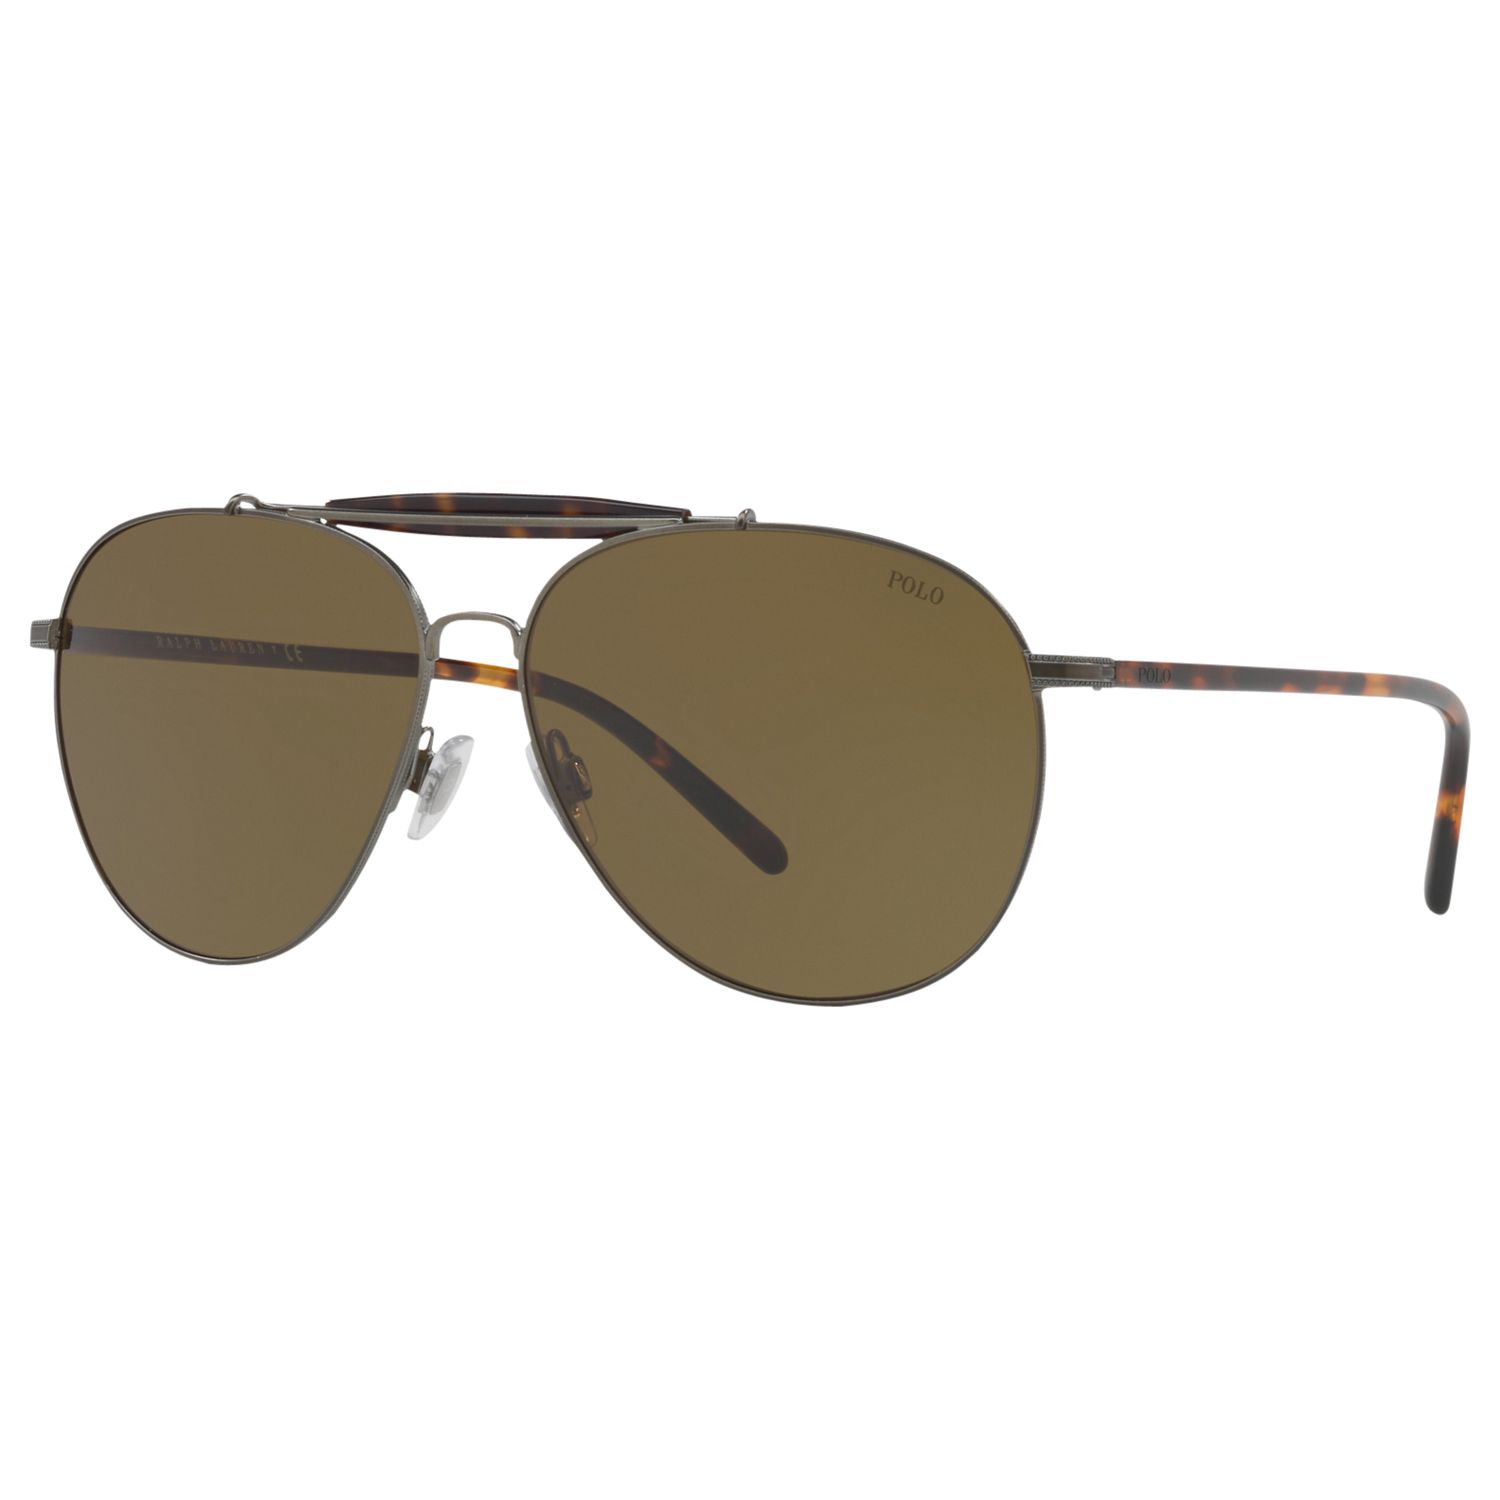 Polo Ralph Lauren PH3106 Men's Aviator Sunglasses at John Lewis & Partners